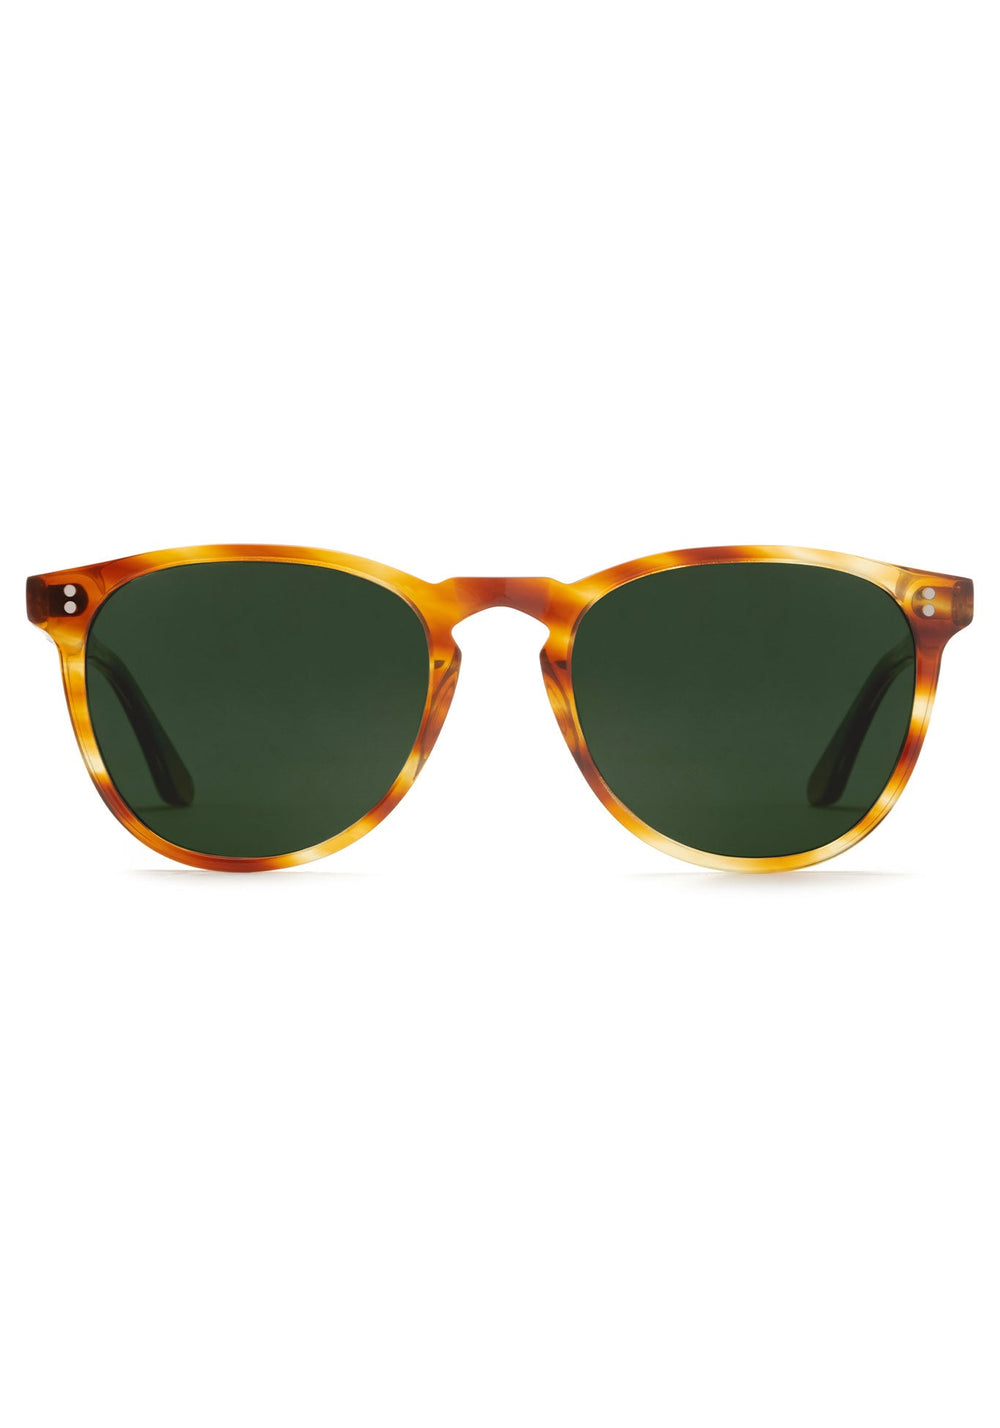 KREWE - Designer Polarized Wayfarer Sunglasses - PRESS | Cedar Polarized Handcrafted, luxury brown acetate sunglasses. Similar to Oliver Peoples sunglasses, moscot sunglasses, persol sunglasses